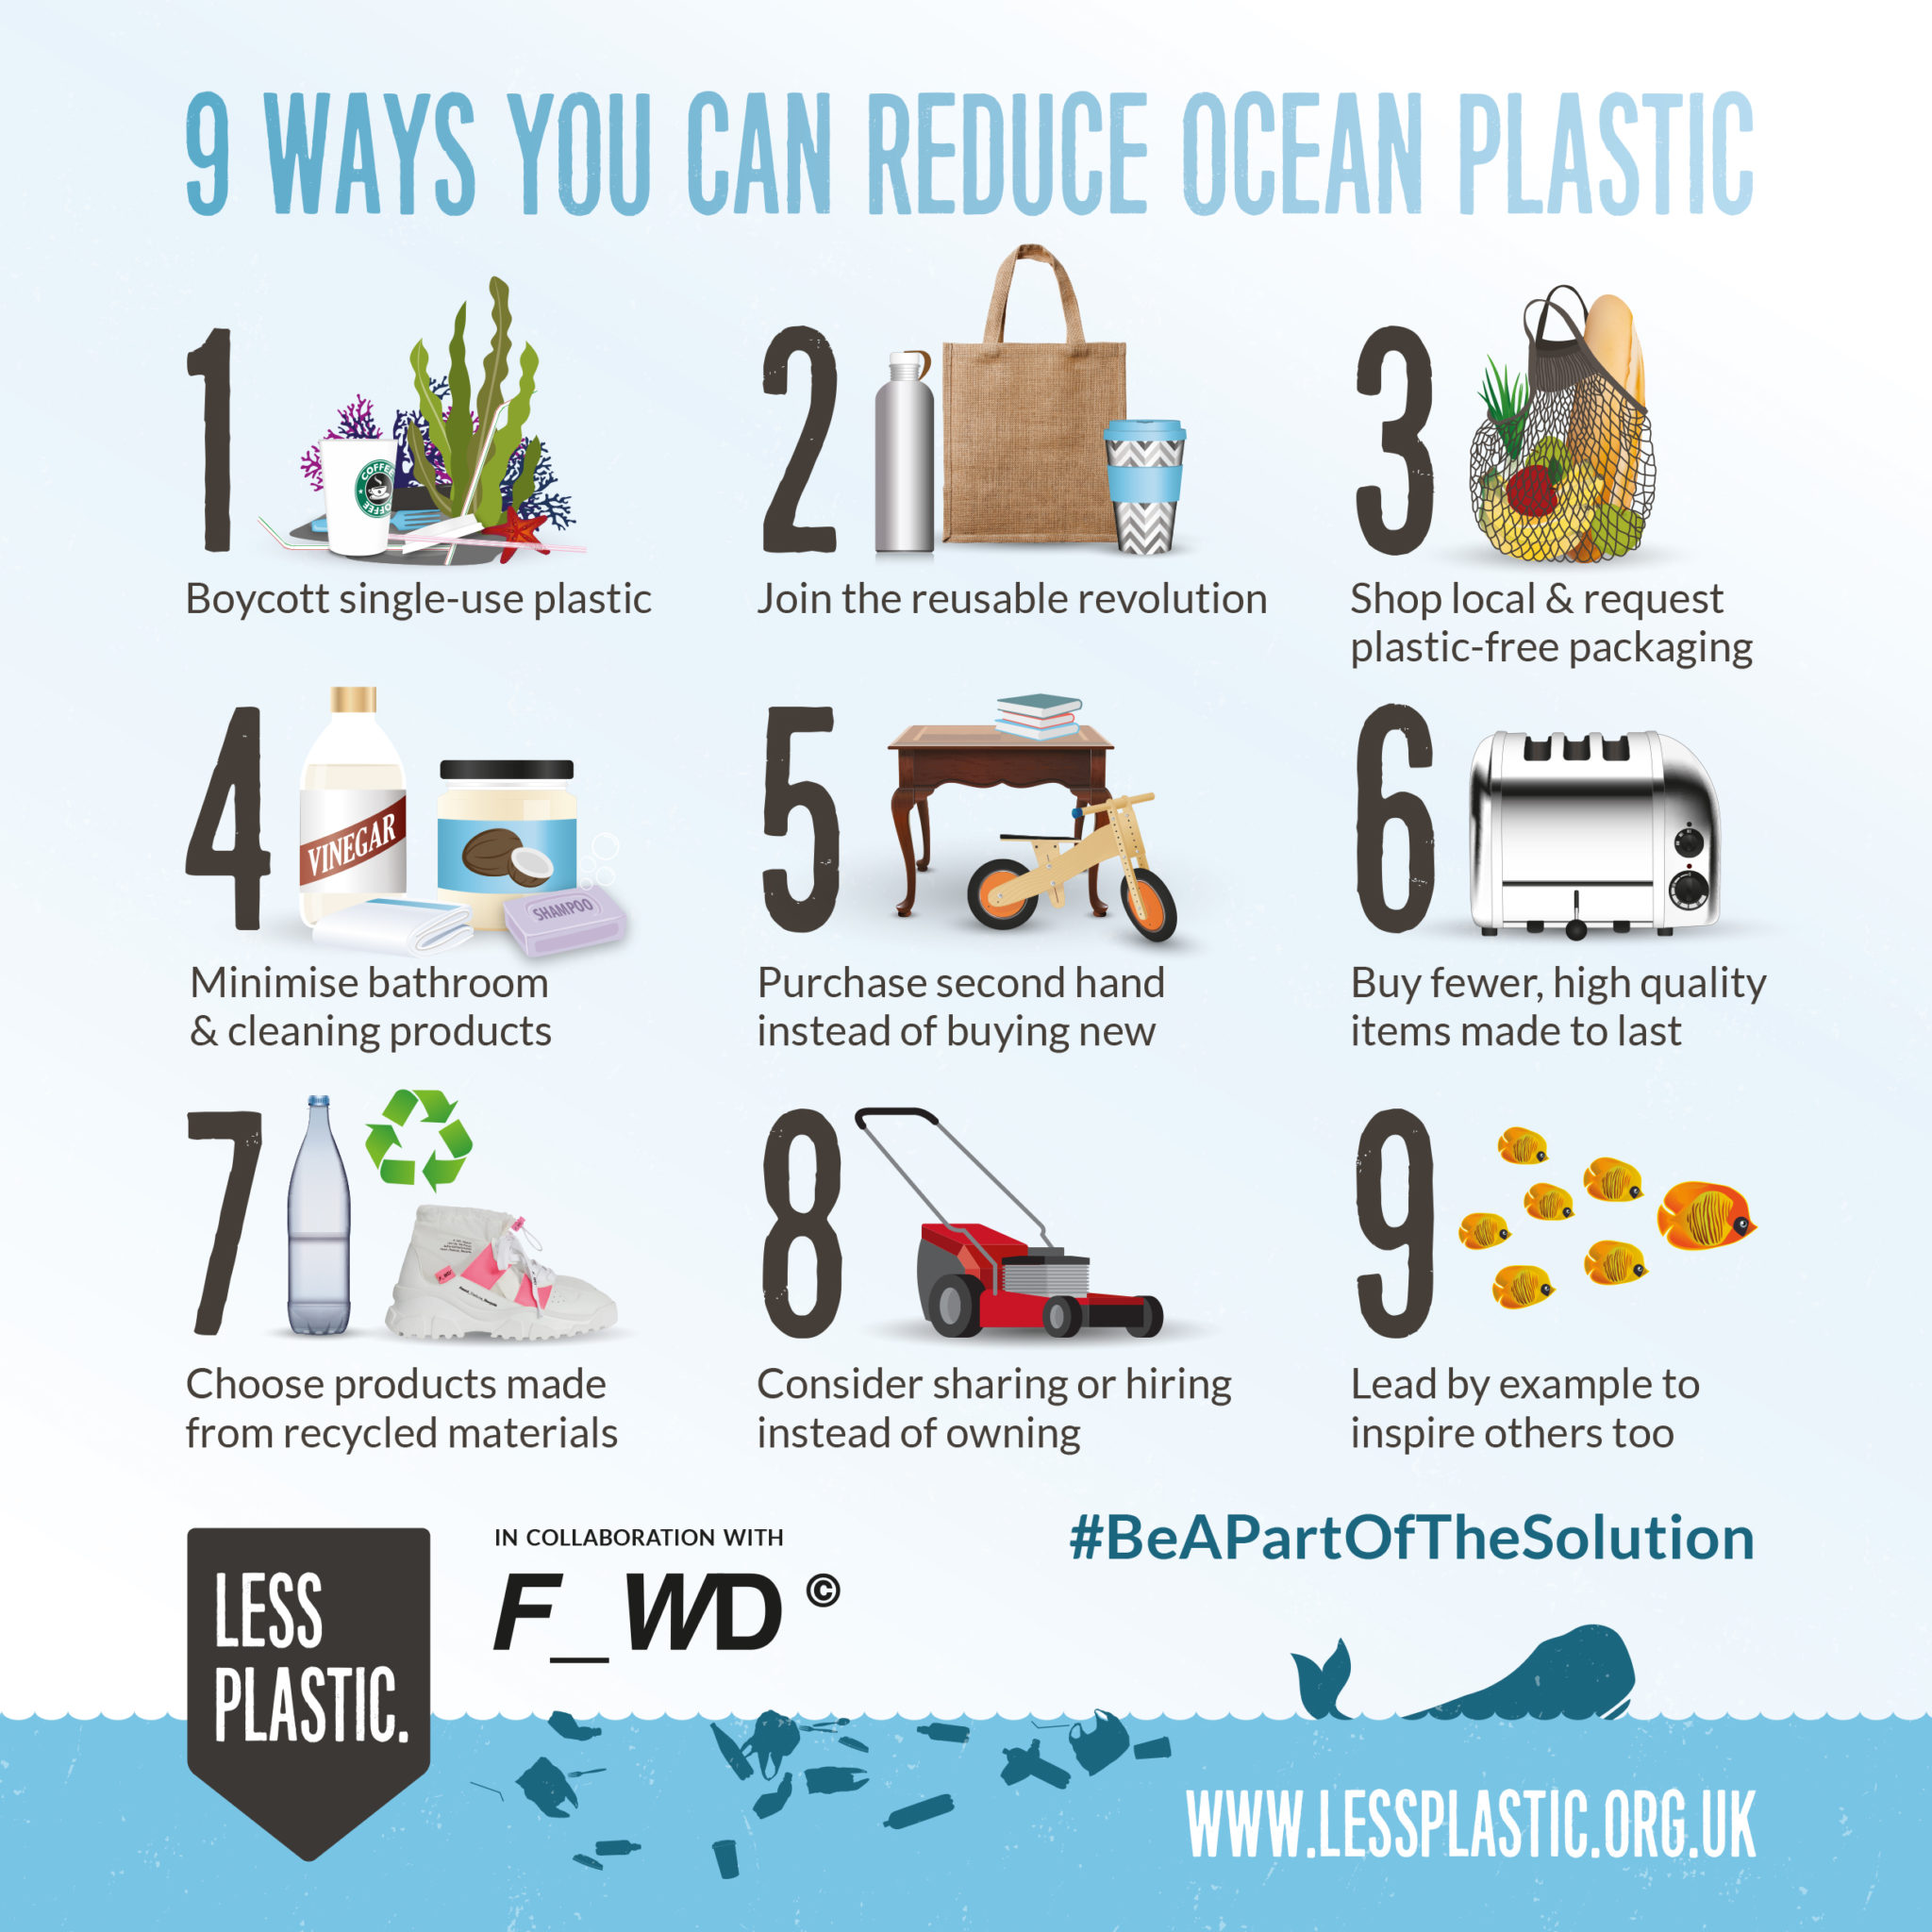 Stop Using Plastic Straws Stop Plastic Pollutionreduce Stock